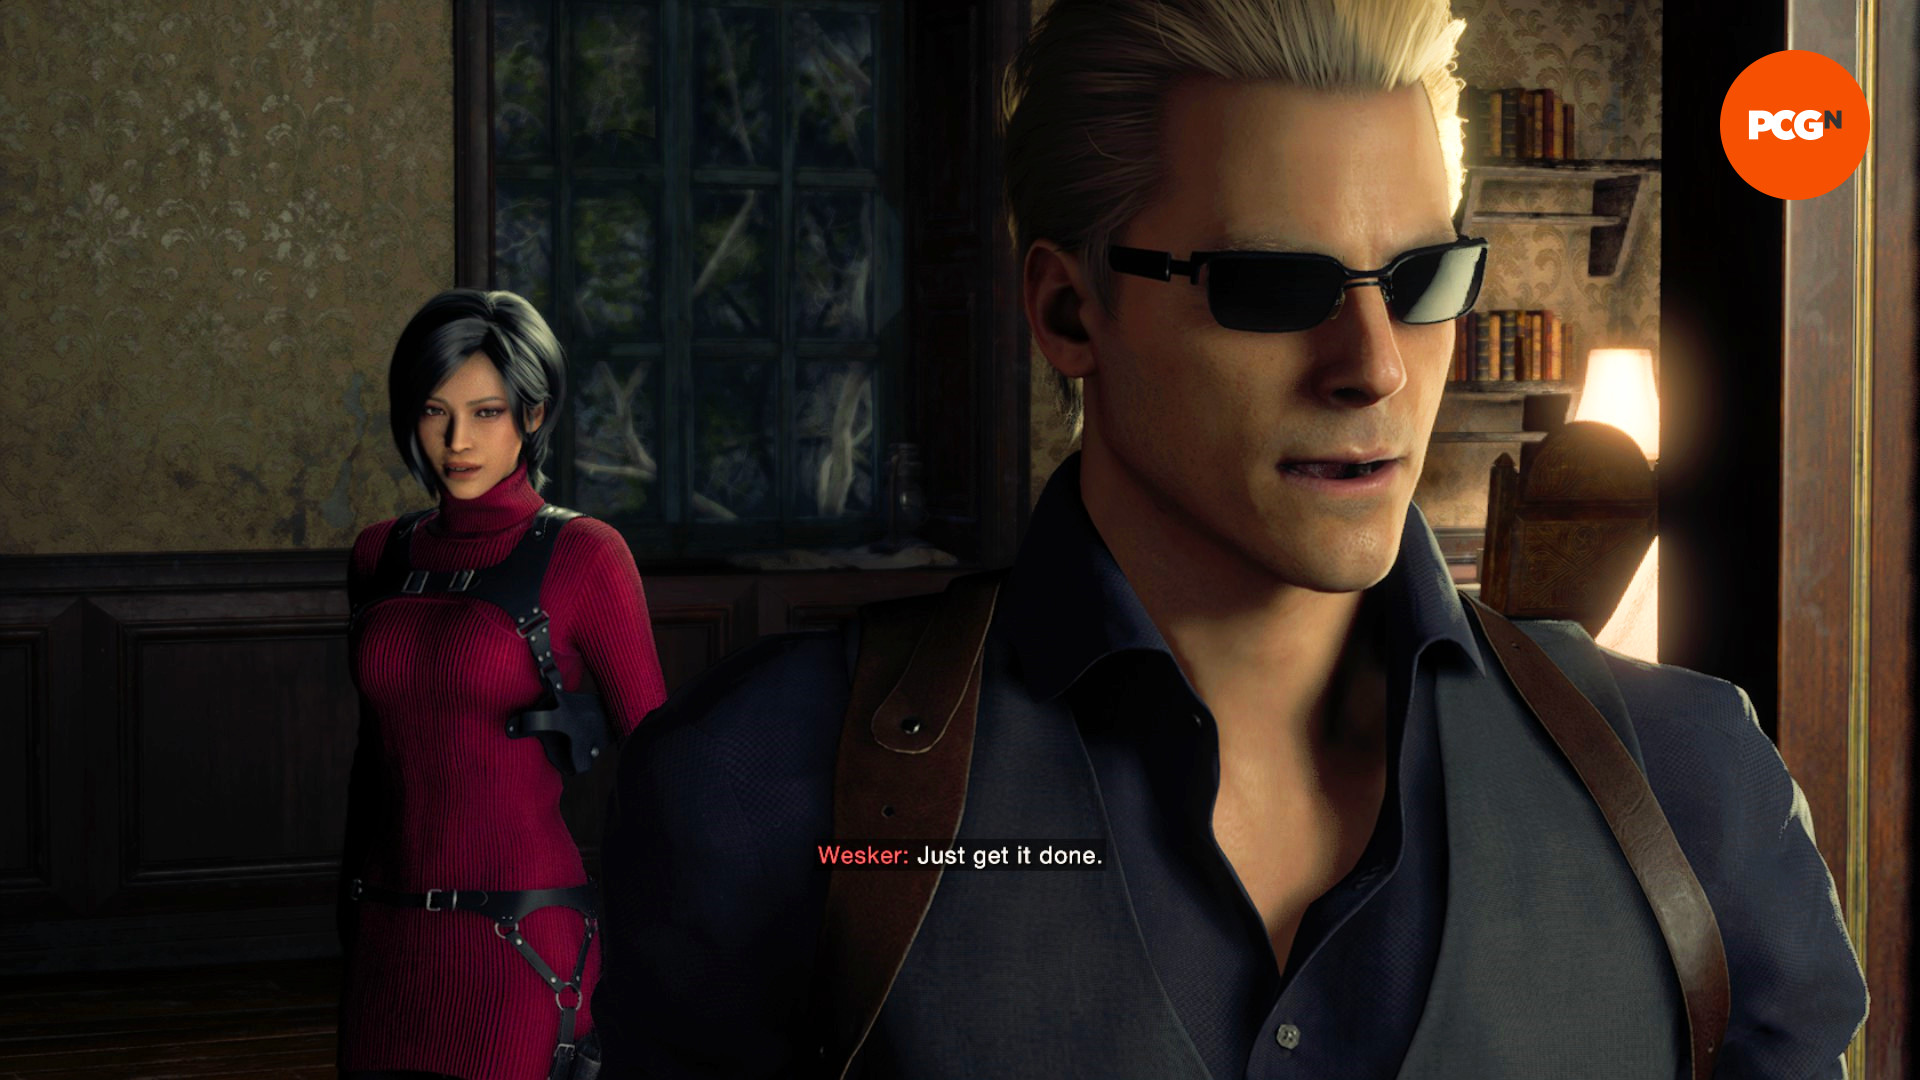 Resident Evil 4 Remake: Separate Ways é confirmado